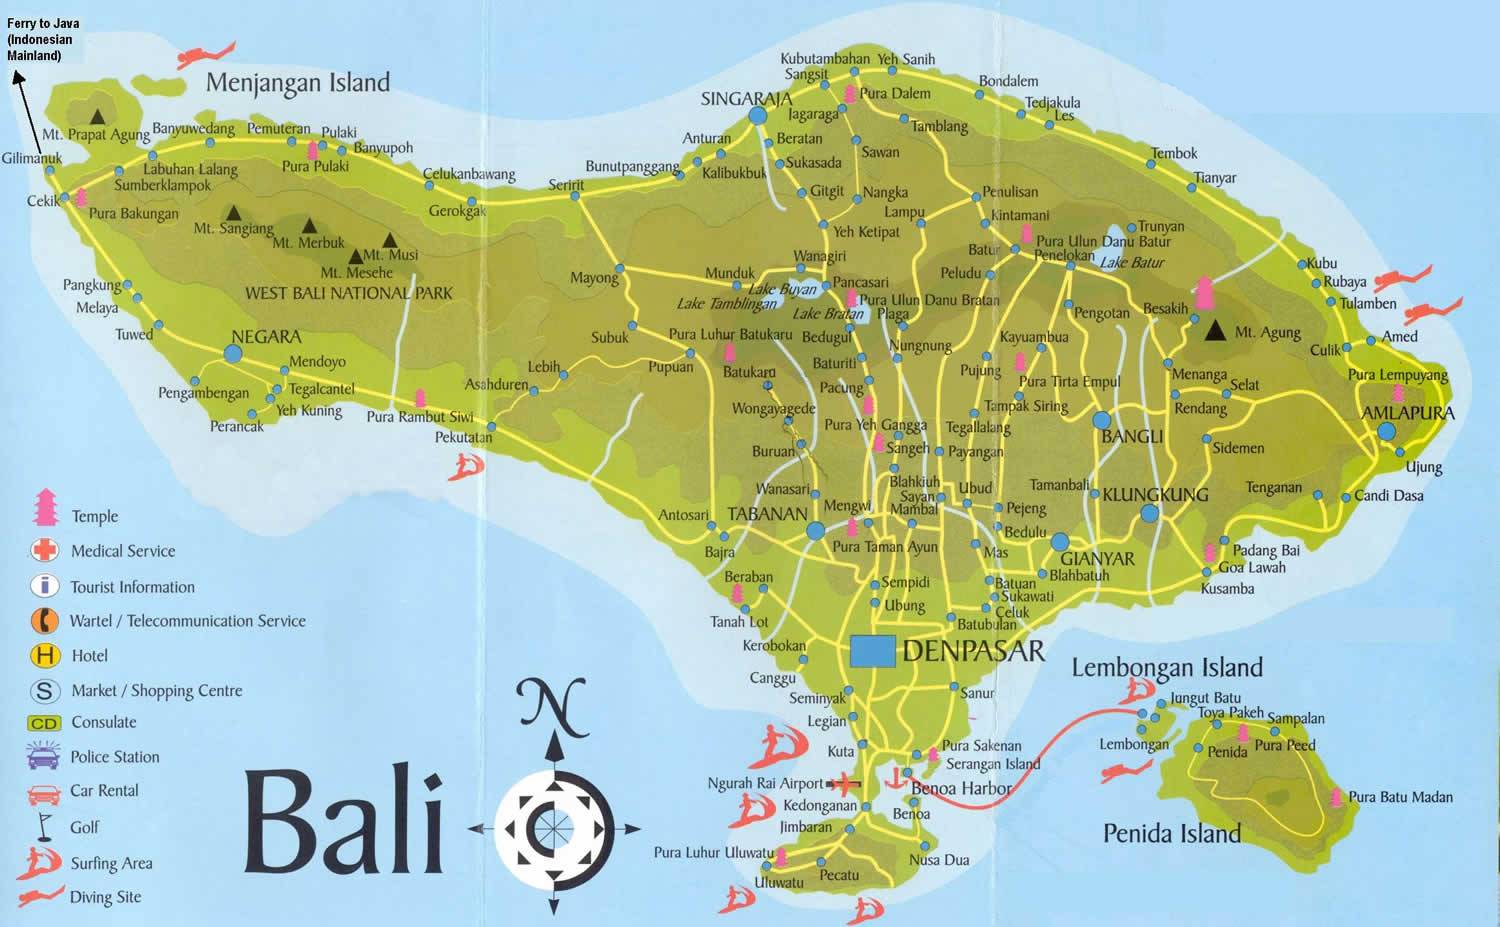 bali tourist guide pdf